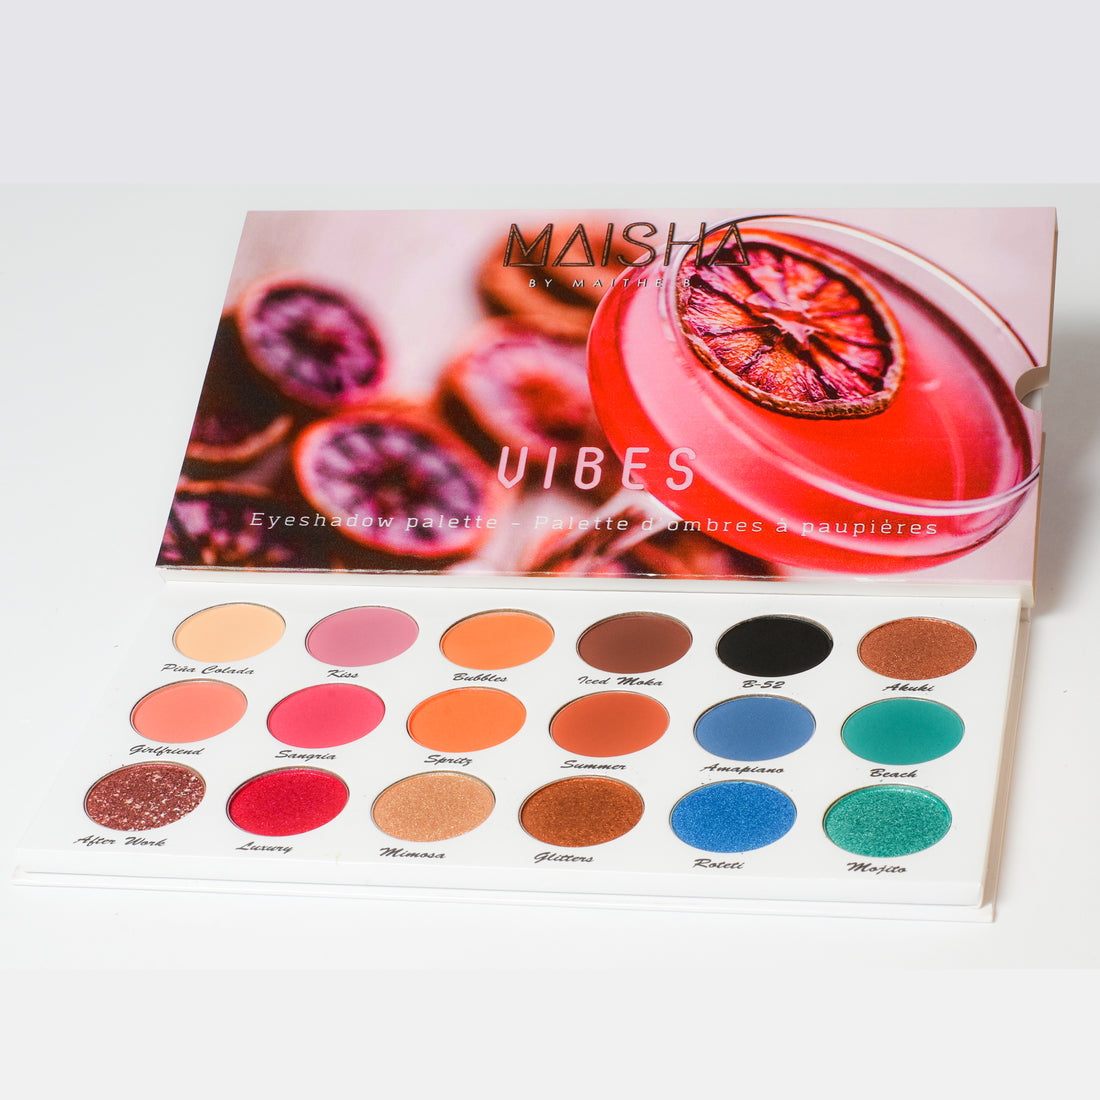 Vibes Eyeshadows Palette - Maisha Beauty Products